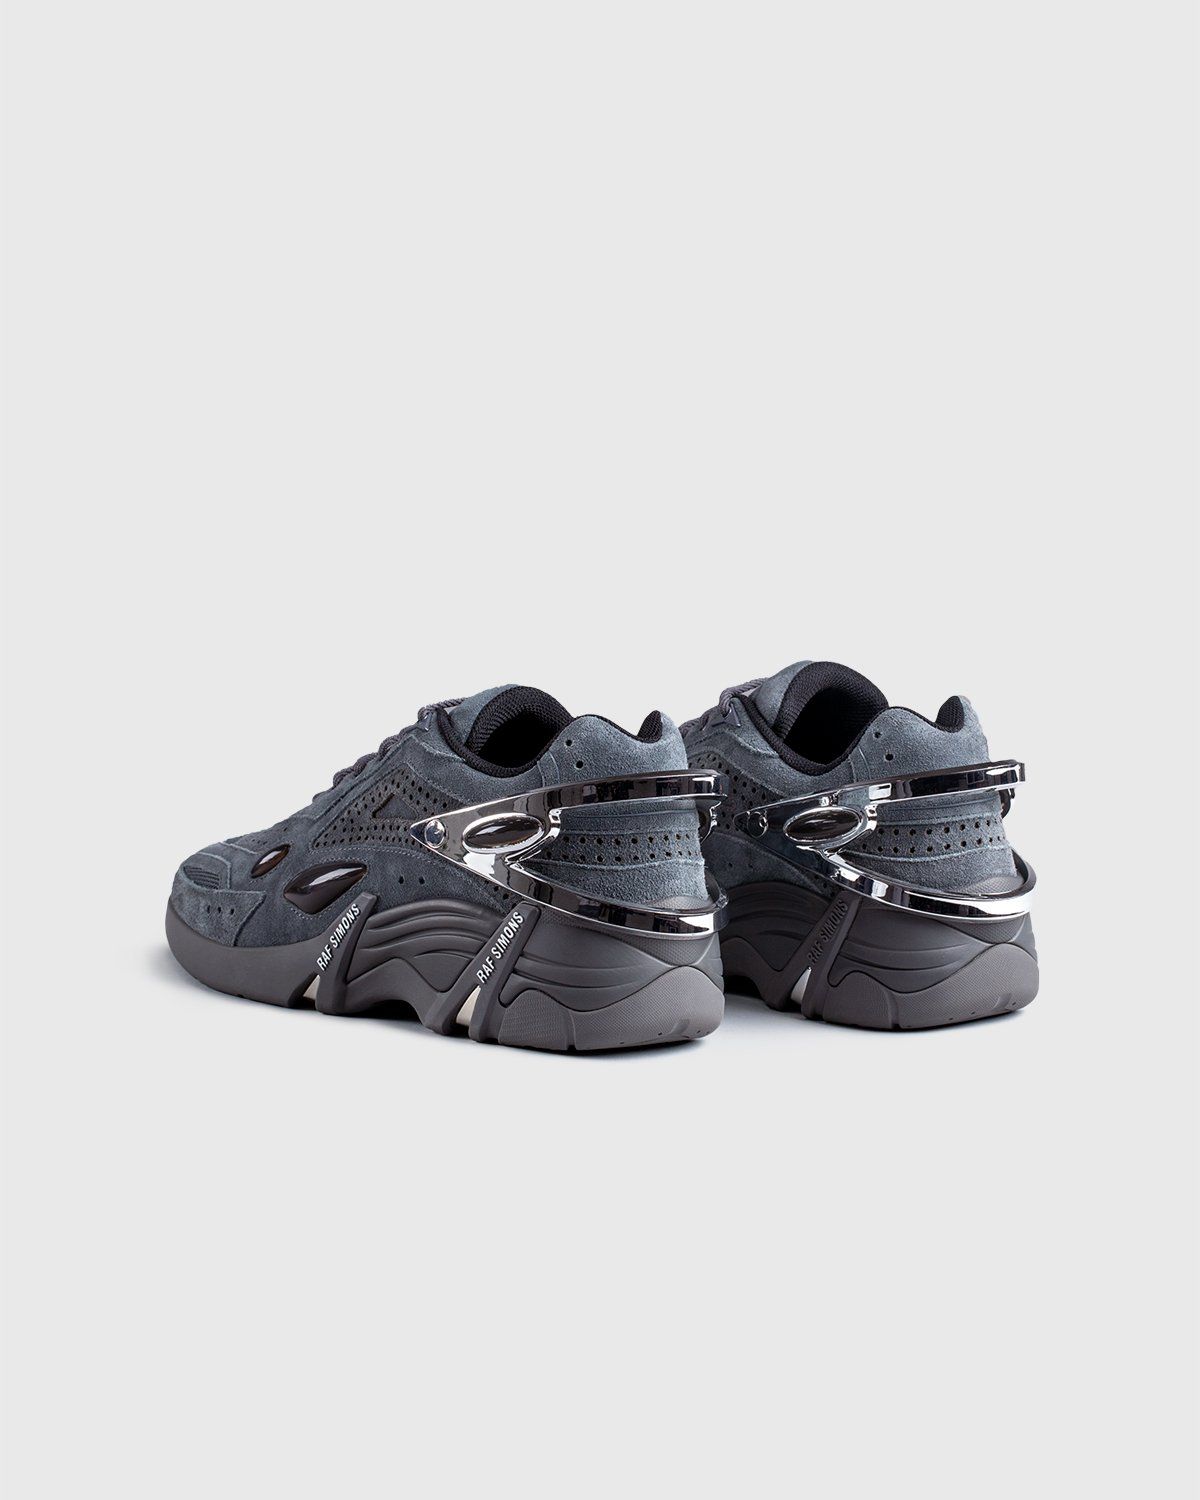 Raf Simons – Cylon Grey - Low Top Sneakers - Grey - Image 4